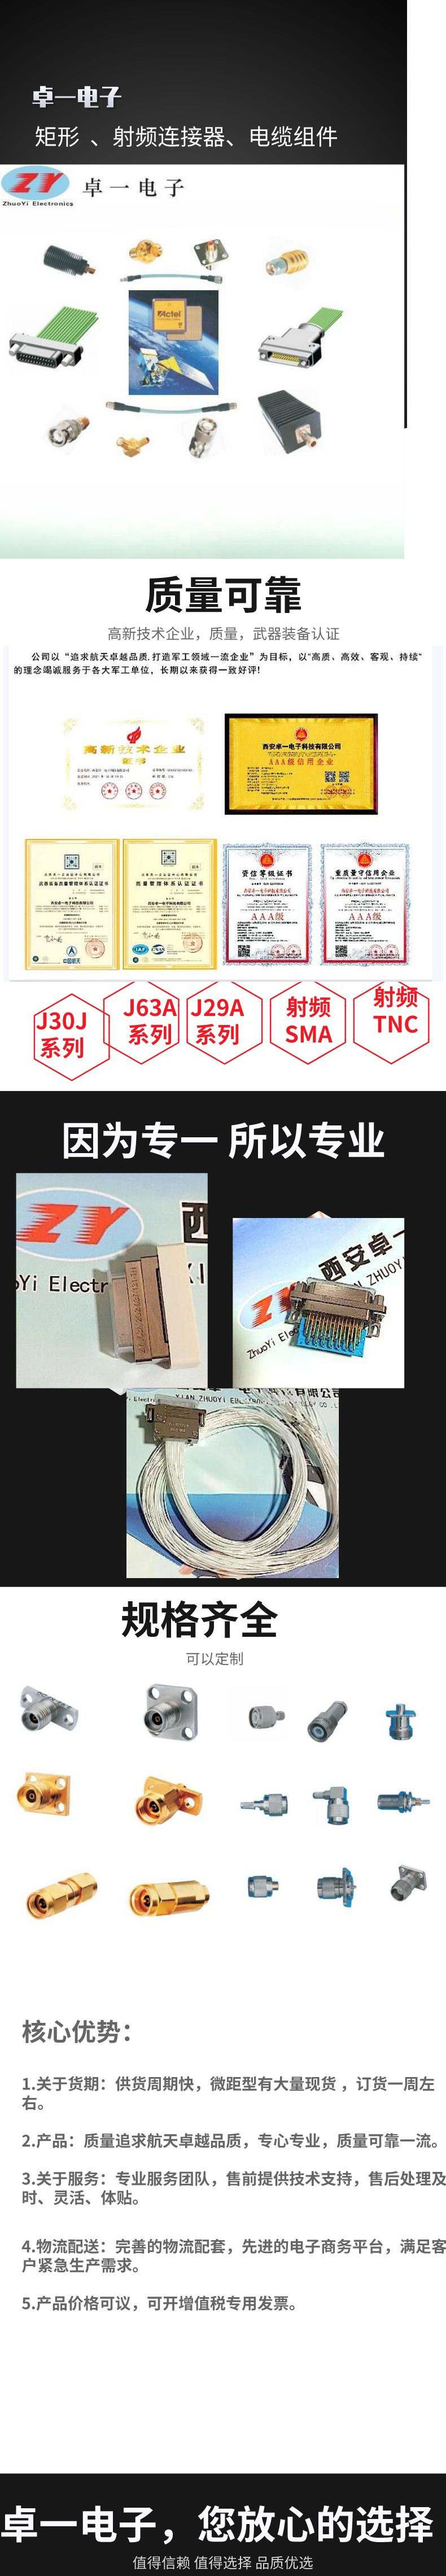 Zhuoyi ZY Micromoment Electrical Connector 21 Core Bending Plug Aviation Plug J30J-21TJW-J